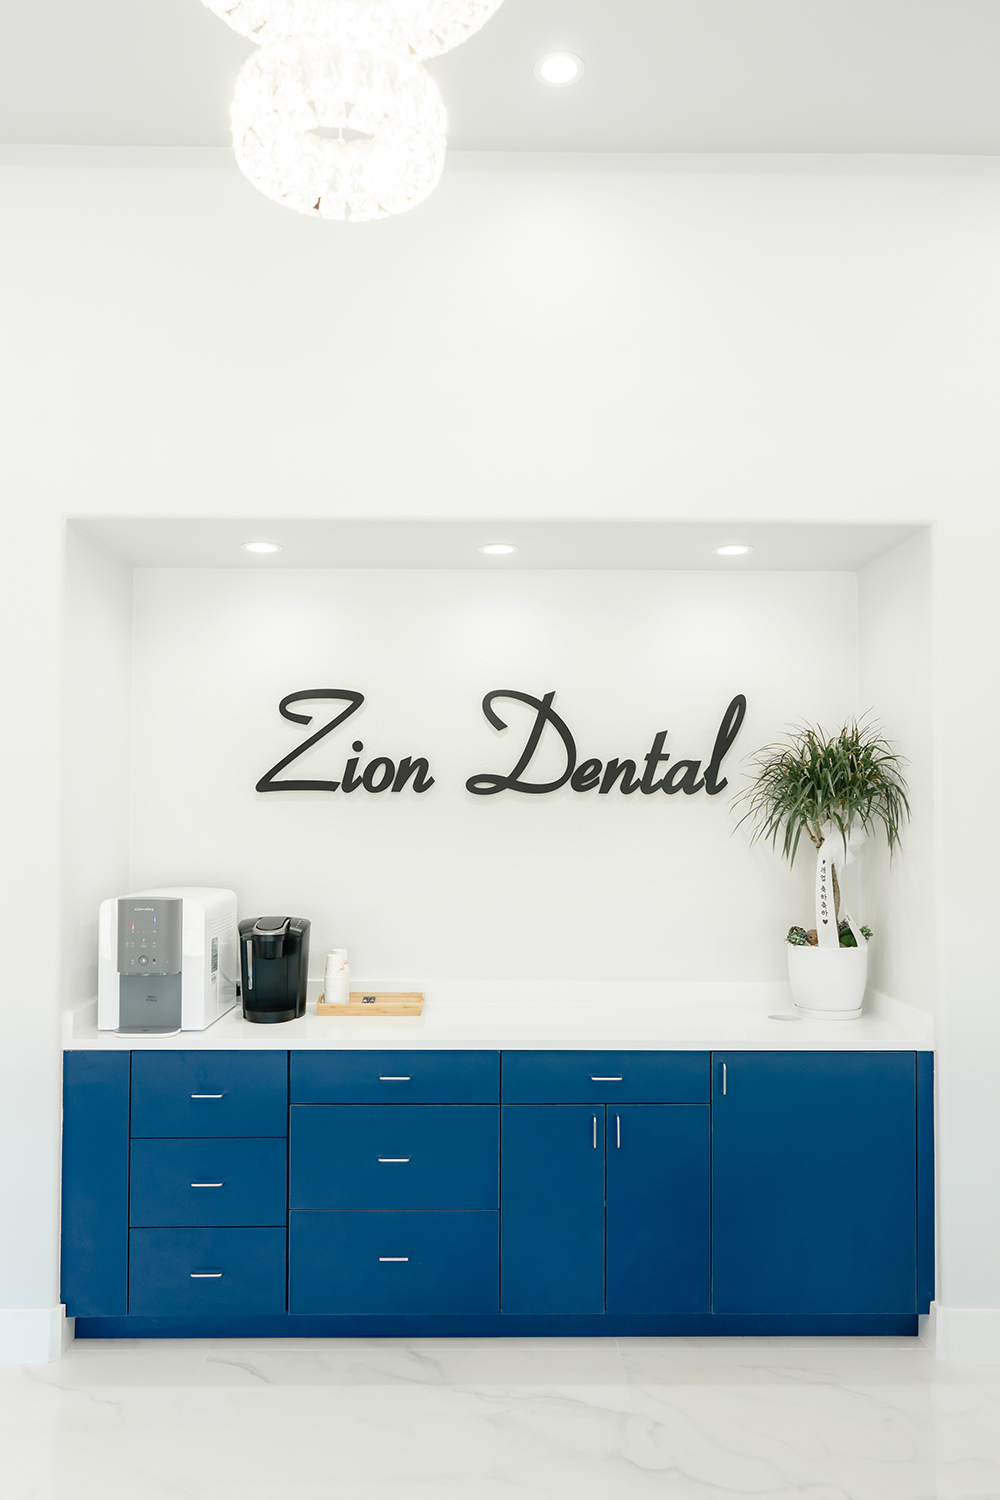 zion dental waiting area